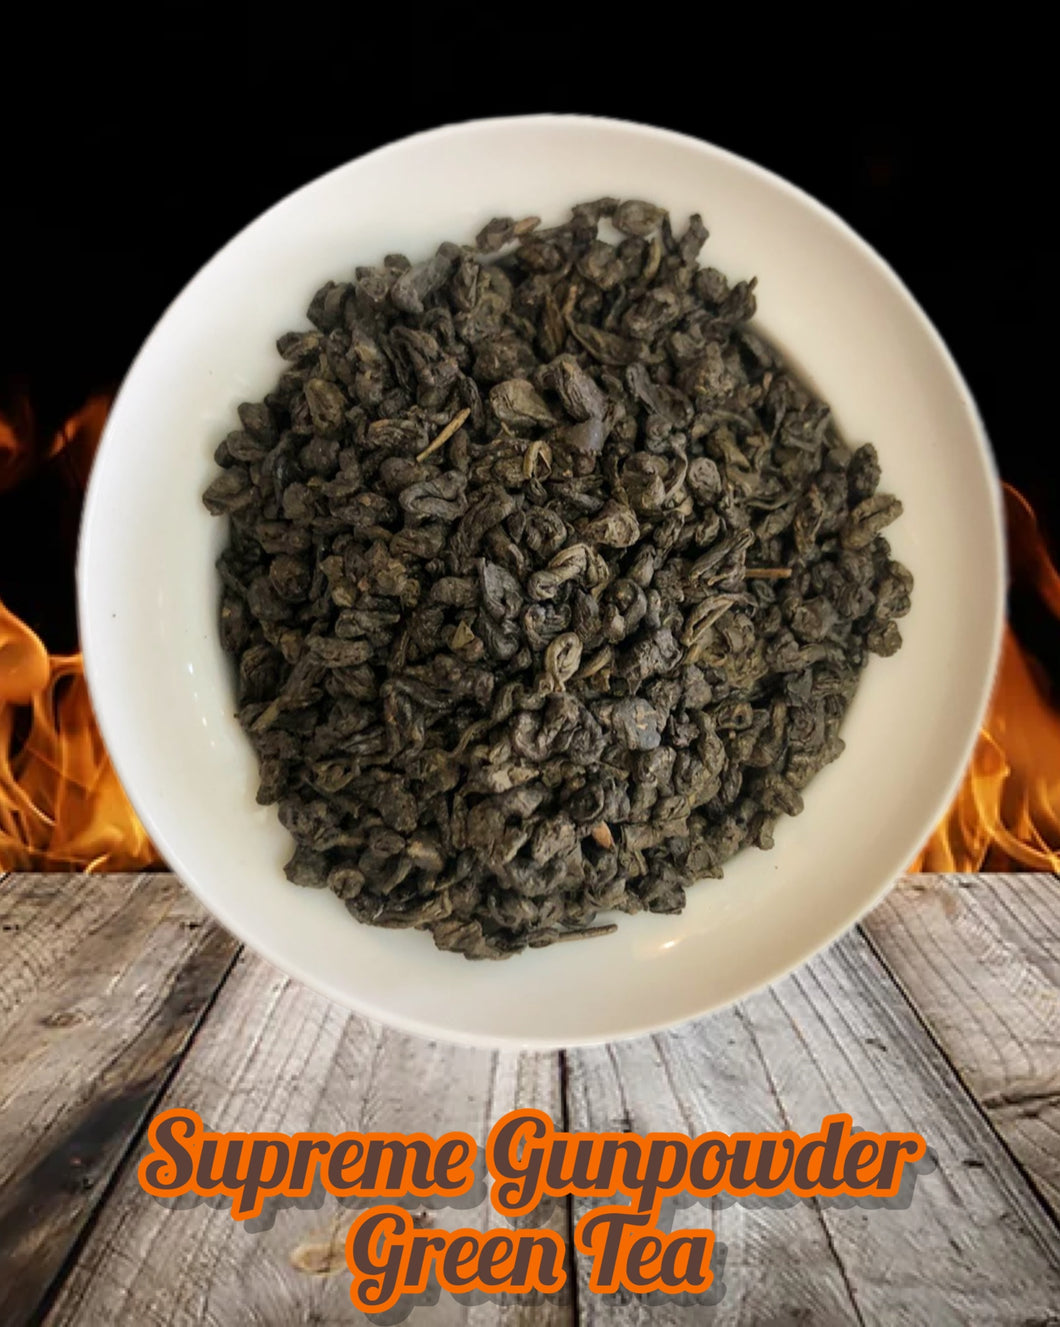 Supreme Gunpowder Green Tea